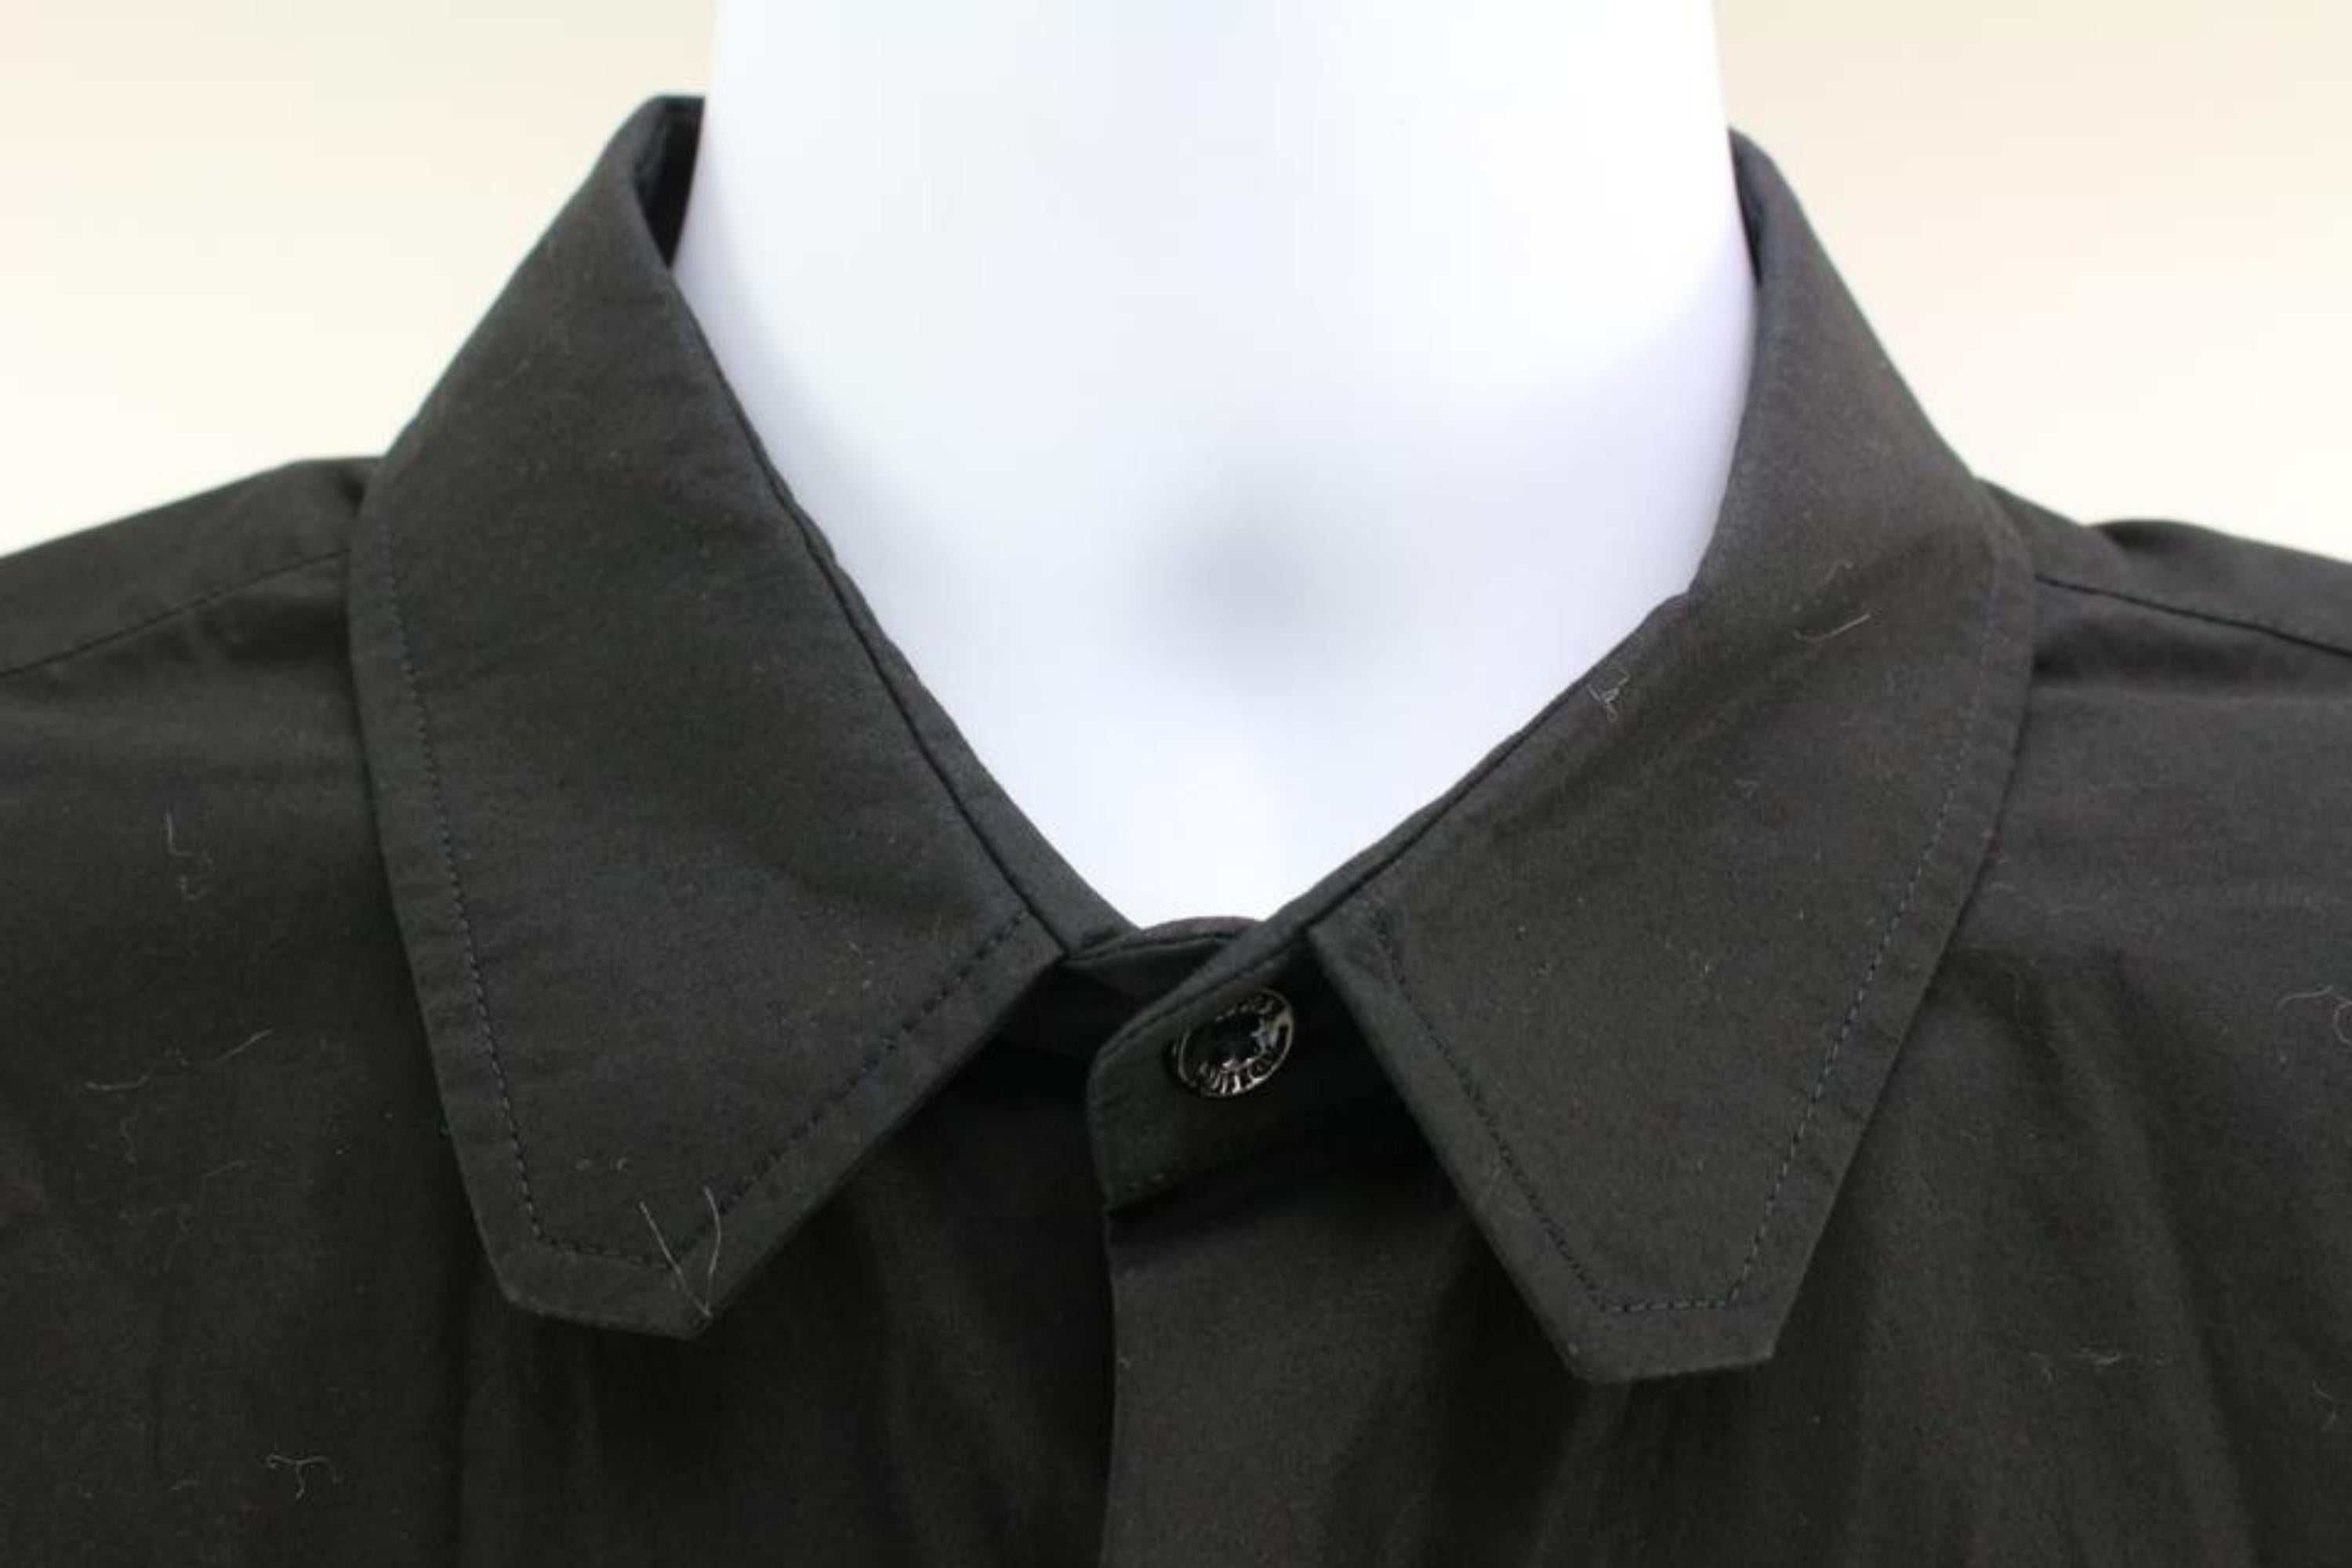 Polo Louis Vuitton - 4 For Sale on 1stDibs  lv polo shirt, lv polo men's,  louis vuitton black polo t shirt